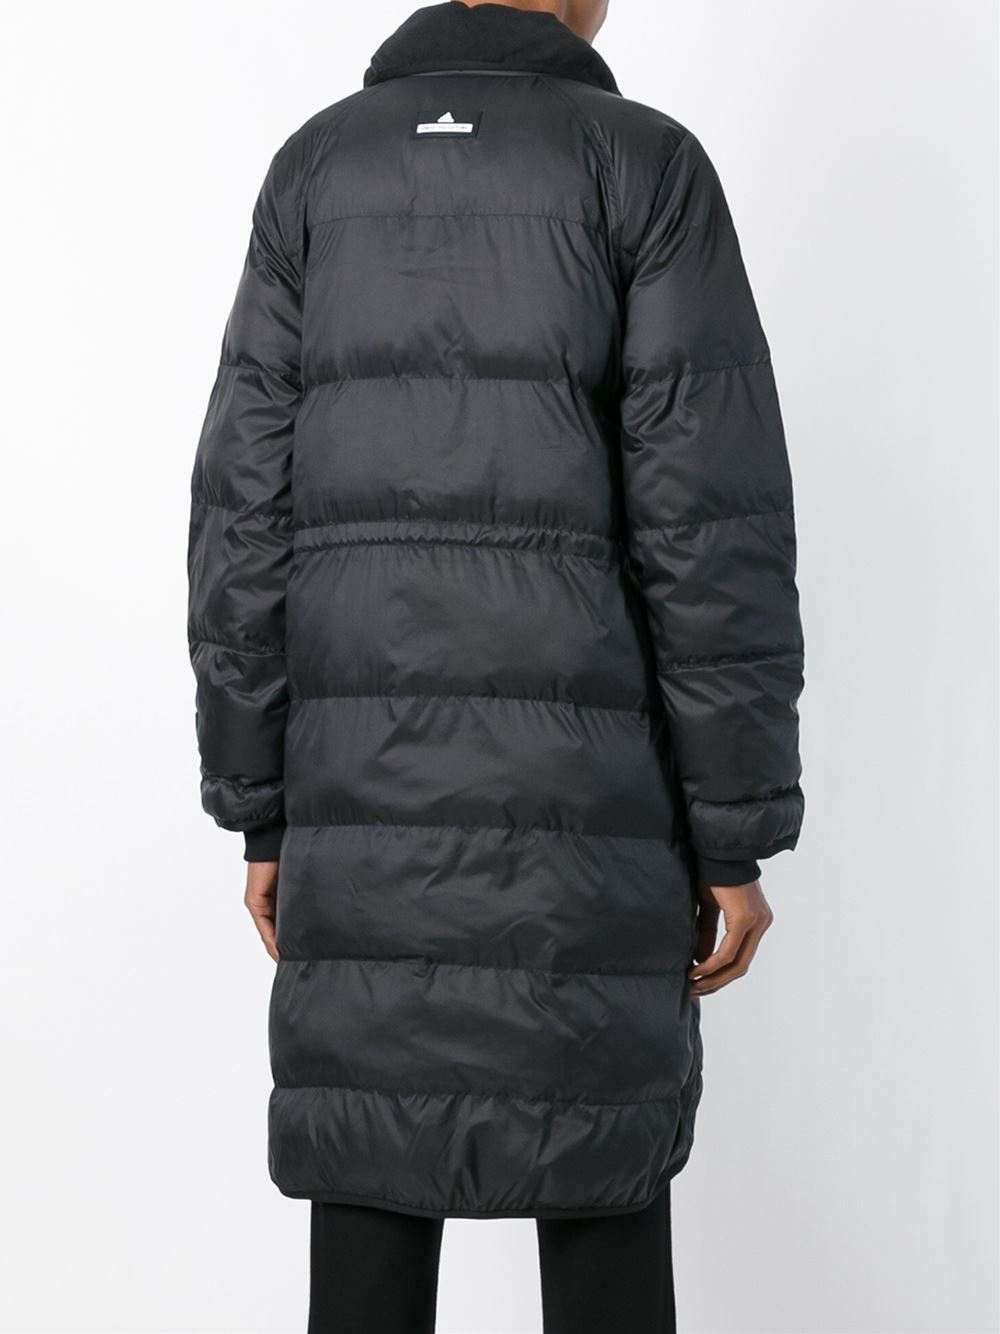 Lyst - Adidas By Stella Mccartney Long Padded Coat in Black